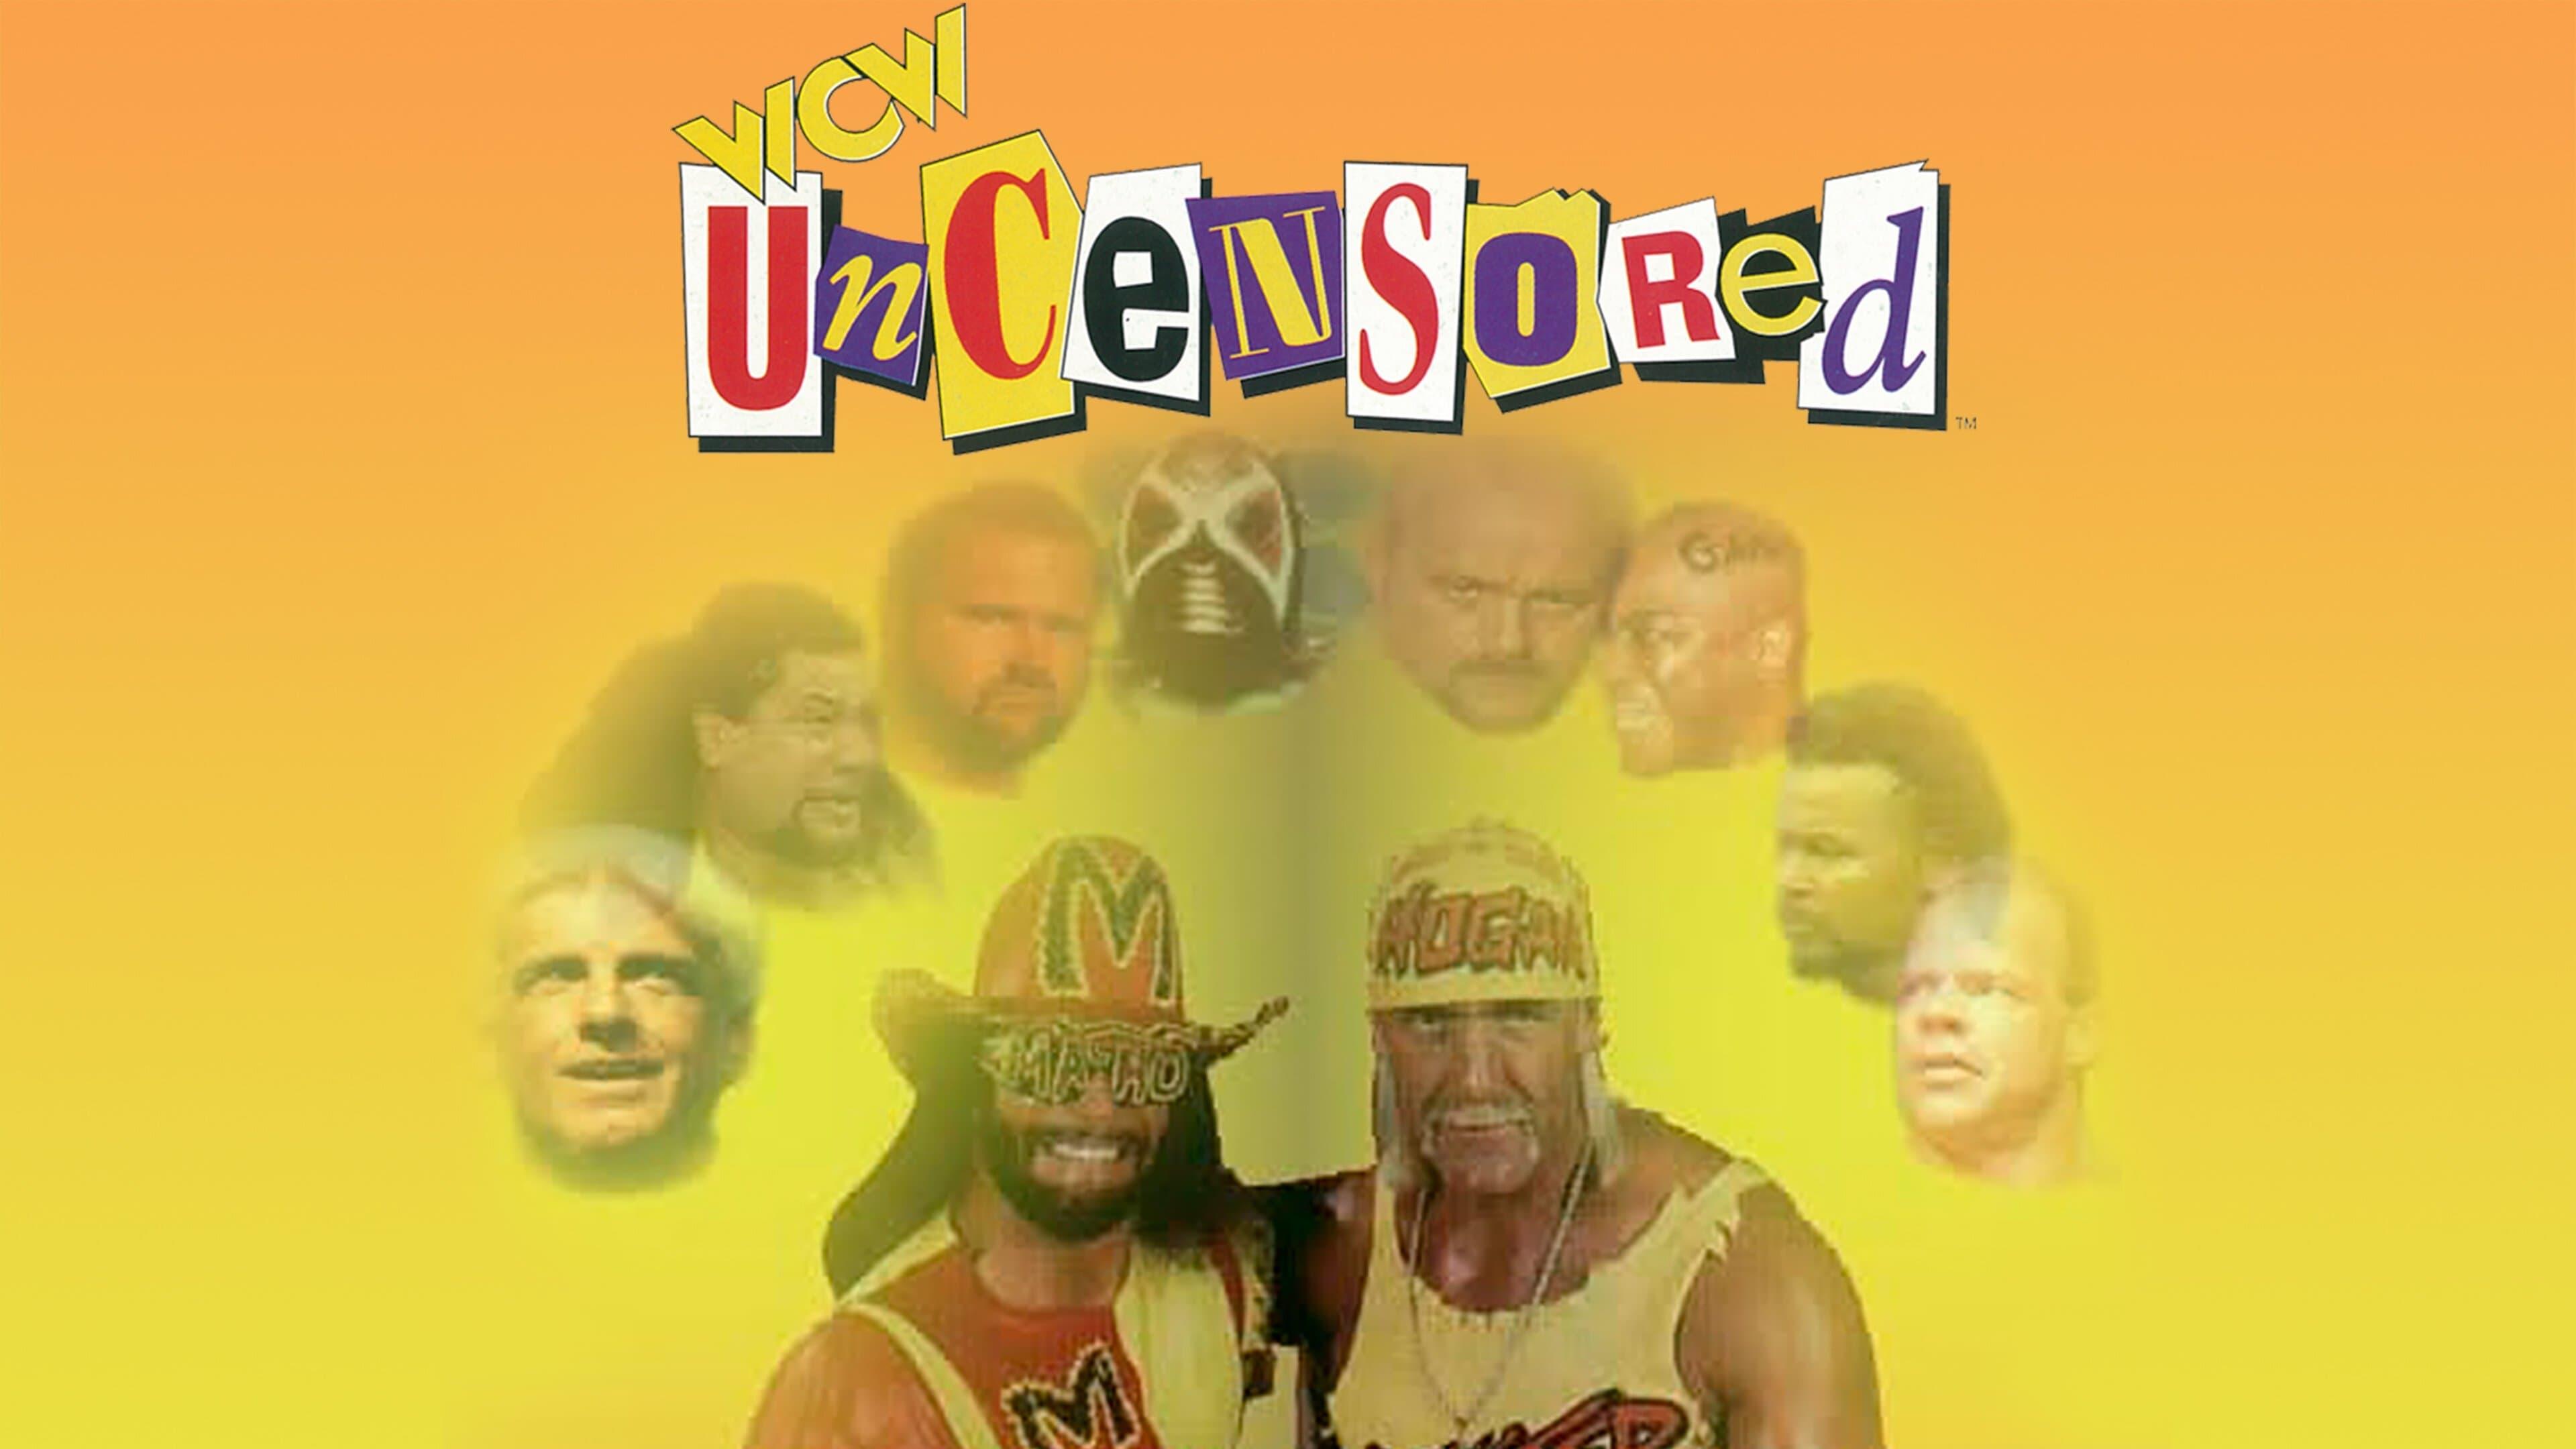 WCW Uncensored 1996 backdrop